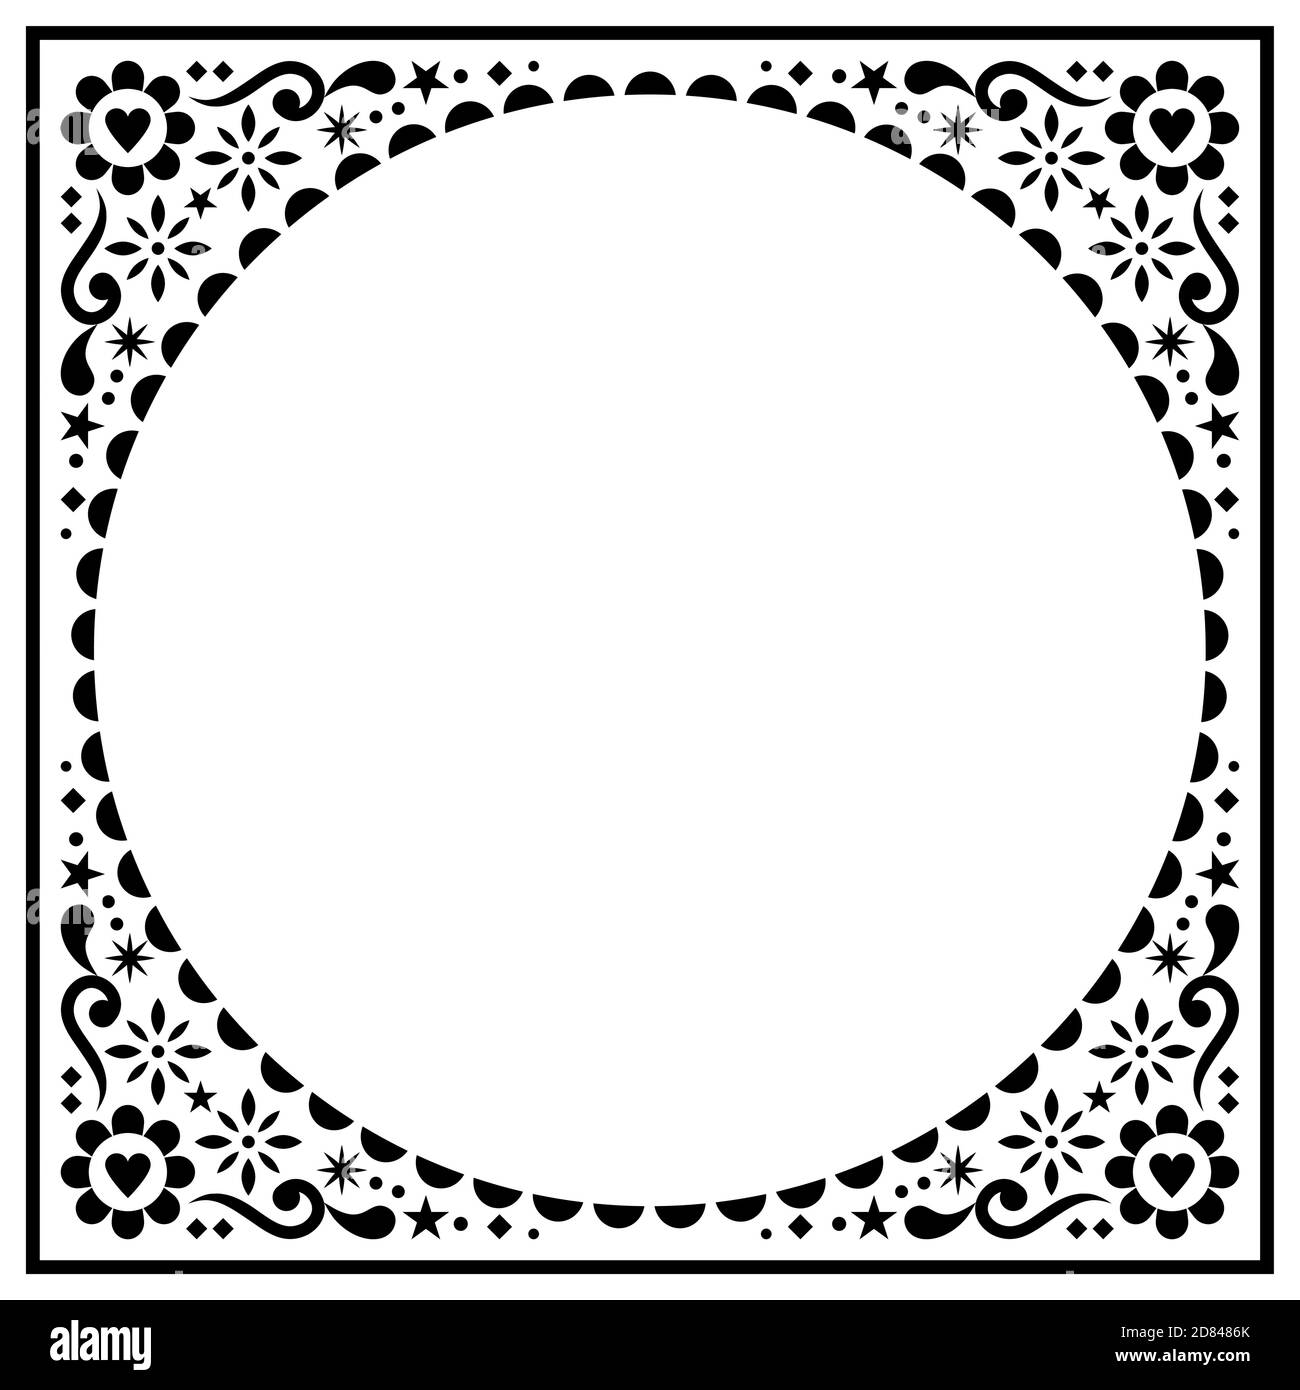 Scandinavian folk greeting card or wedding invitation vector design, floral ethnic pattern in black on white Stock Vector